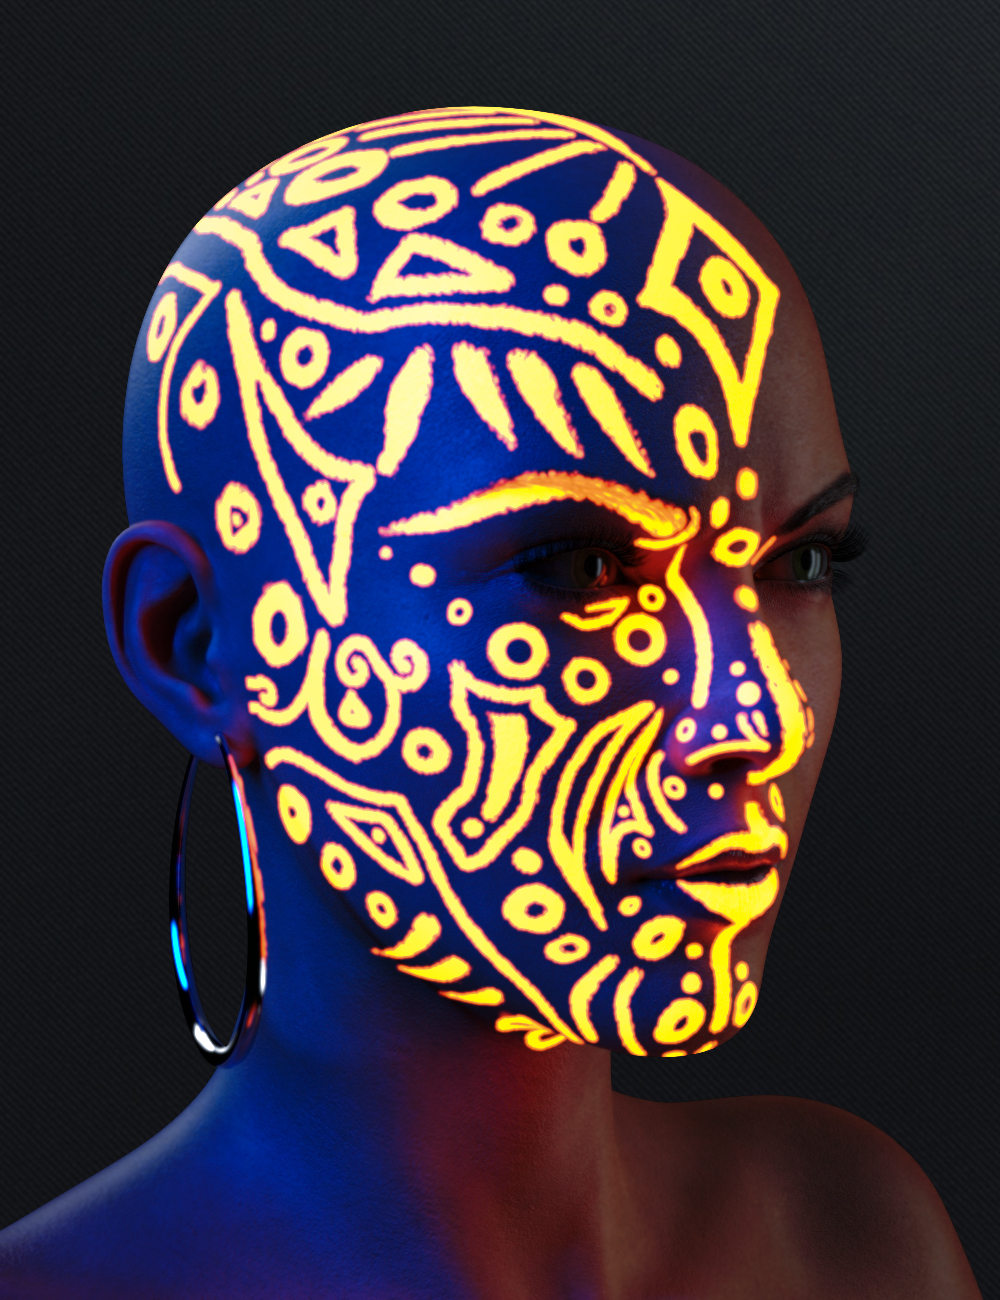 Neon Makeup for Genesis 8 and Genesis 8.1 Females by: 3dLab, 3D Models by Daz 3D